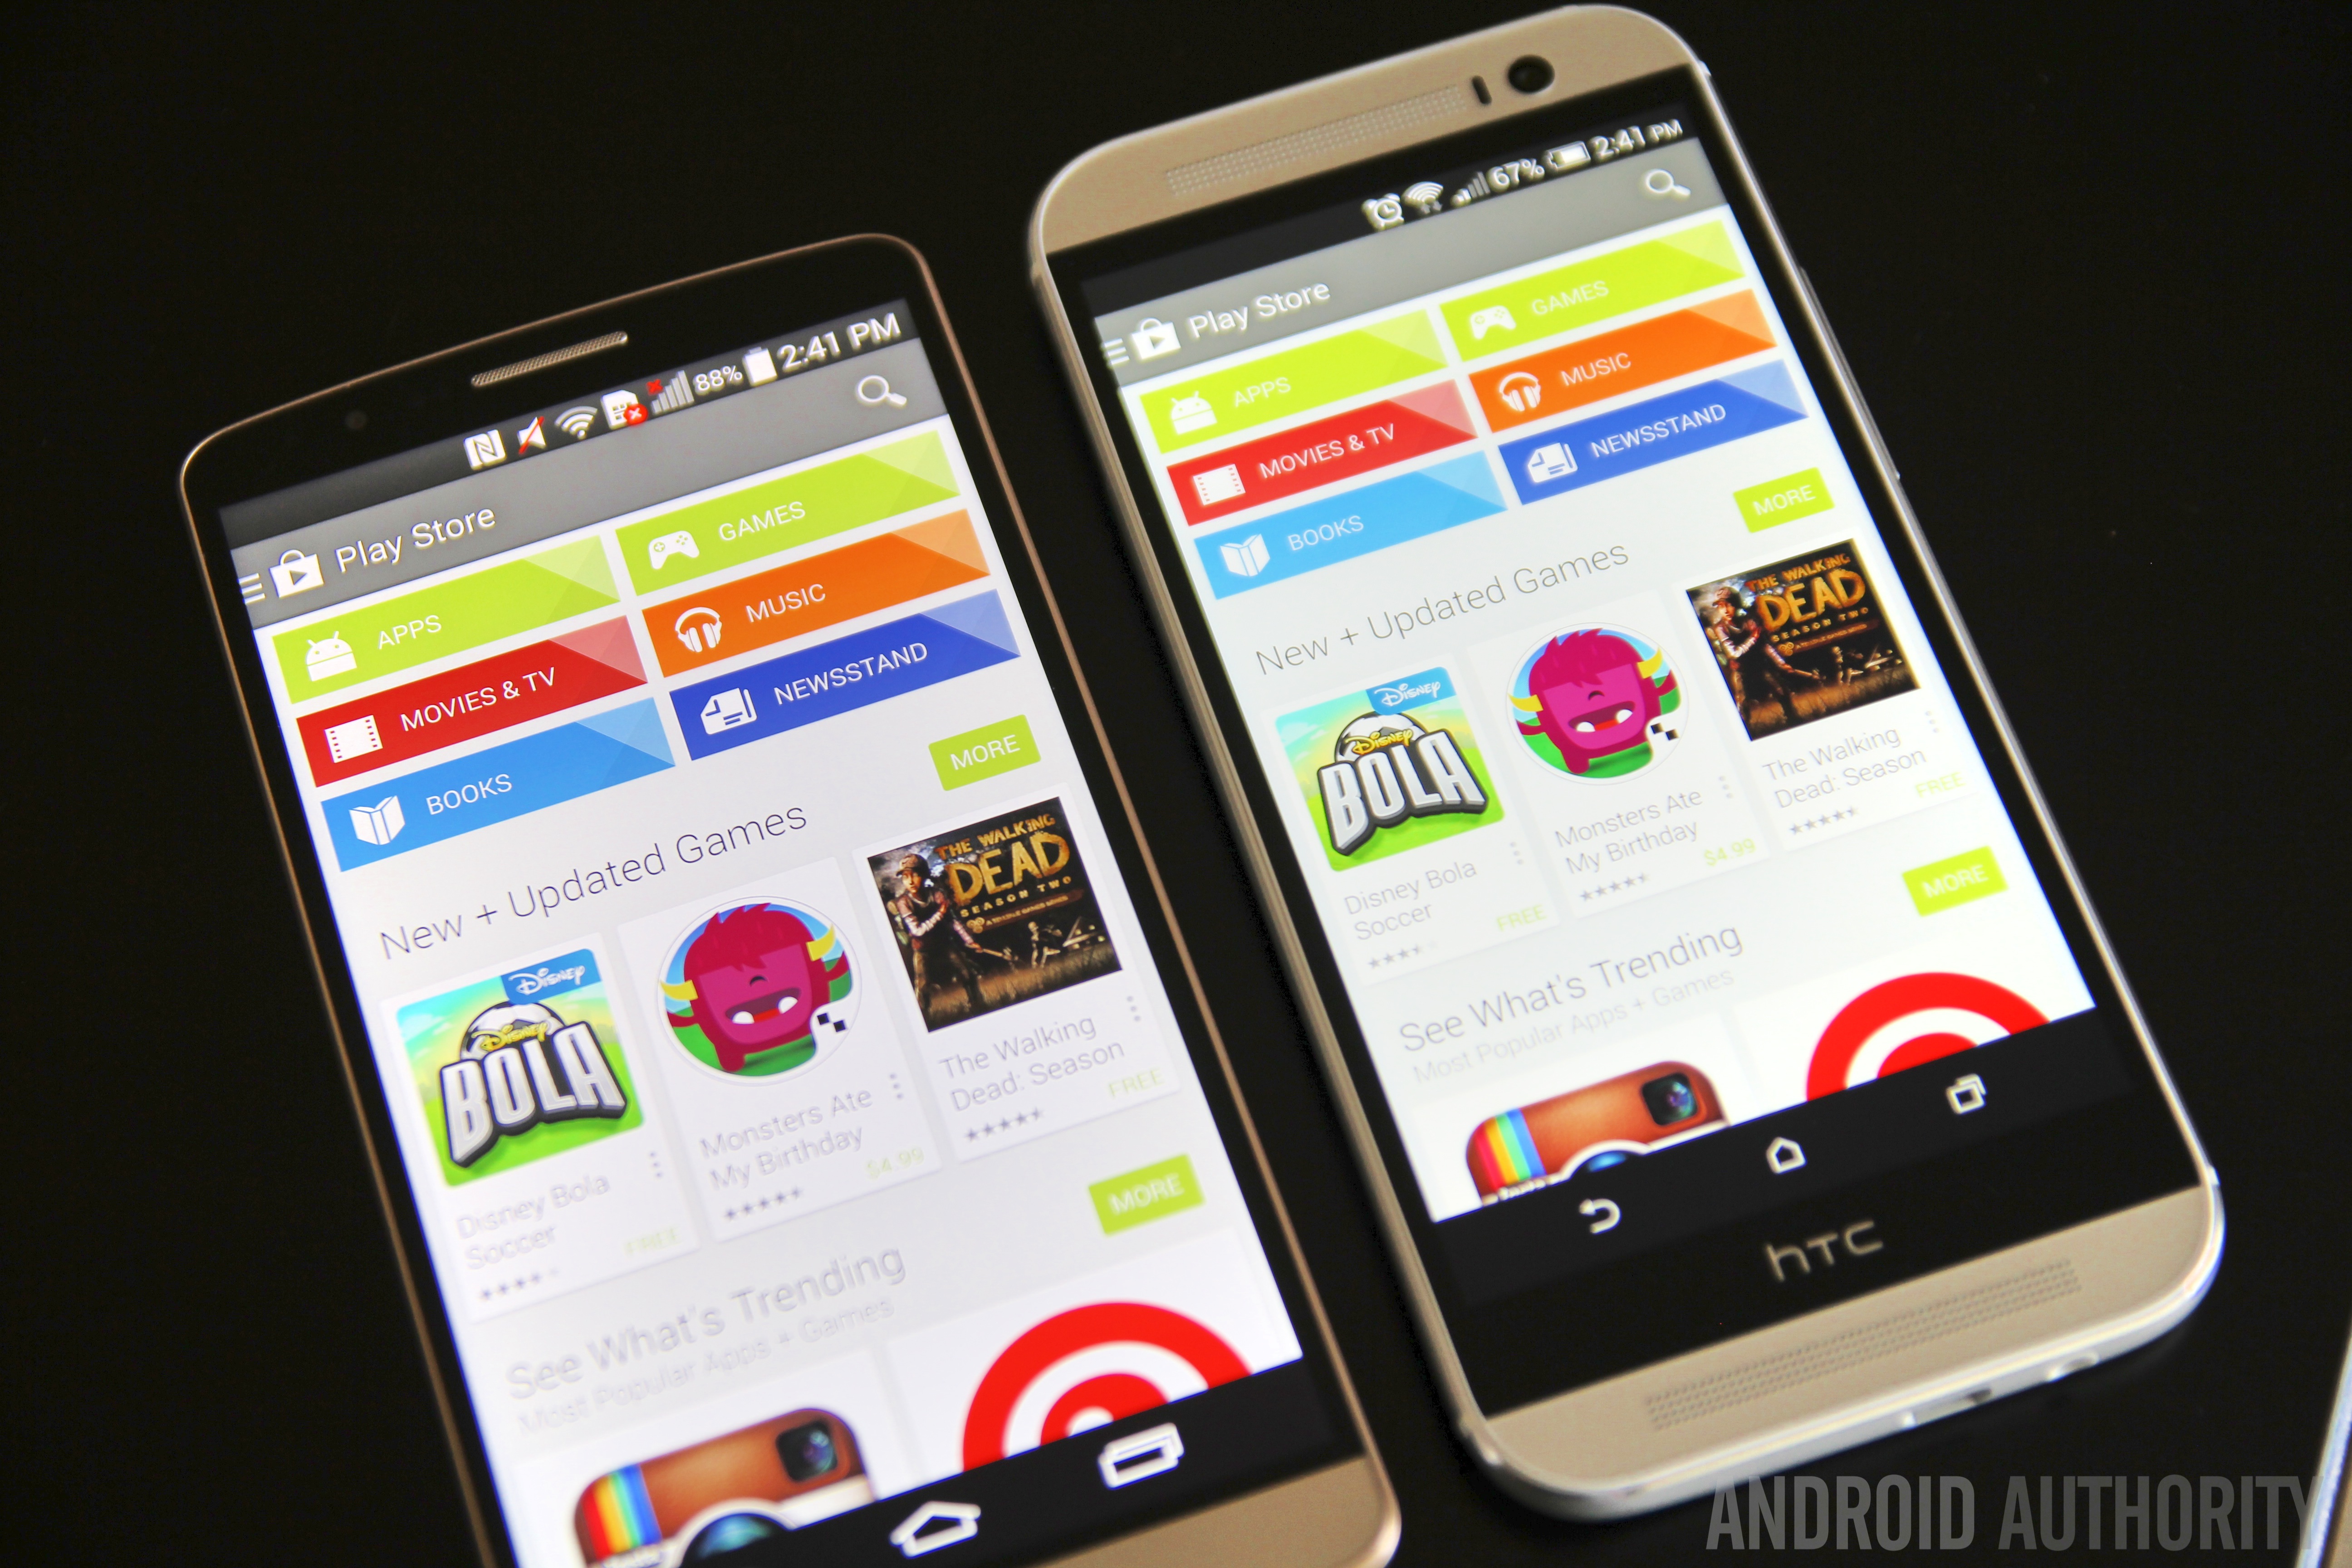 LG G3 Vs HTC One M8-2